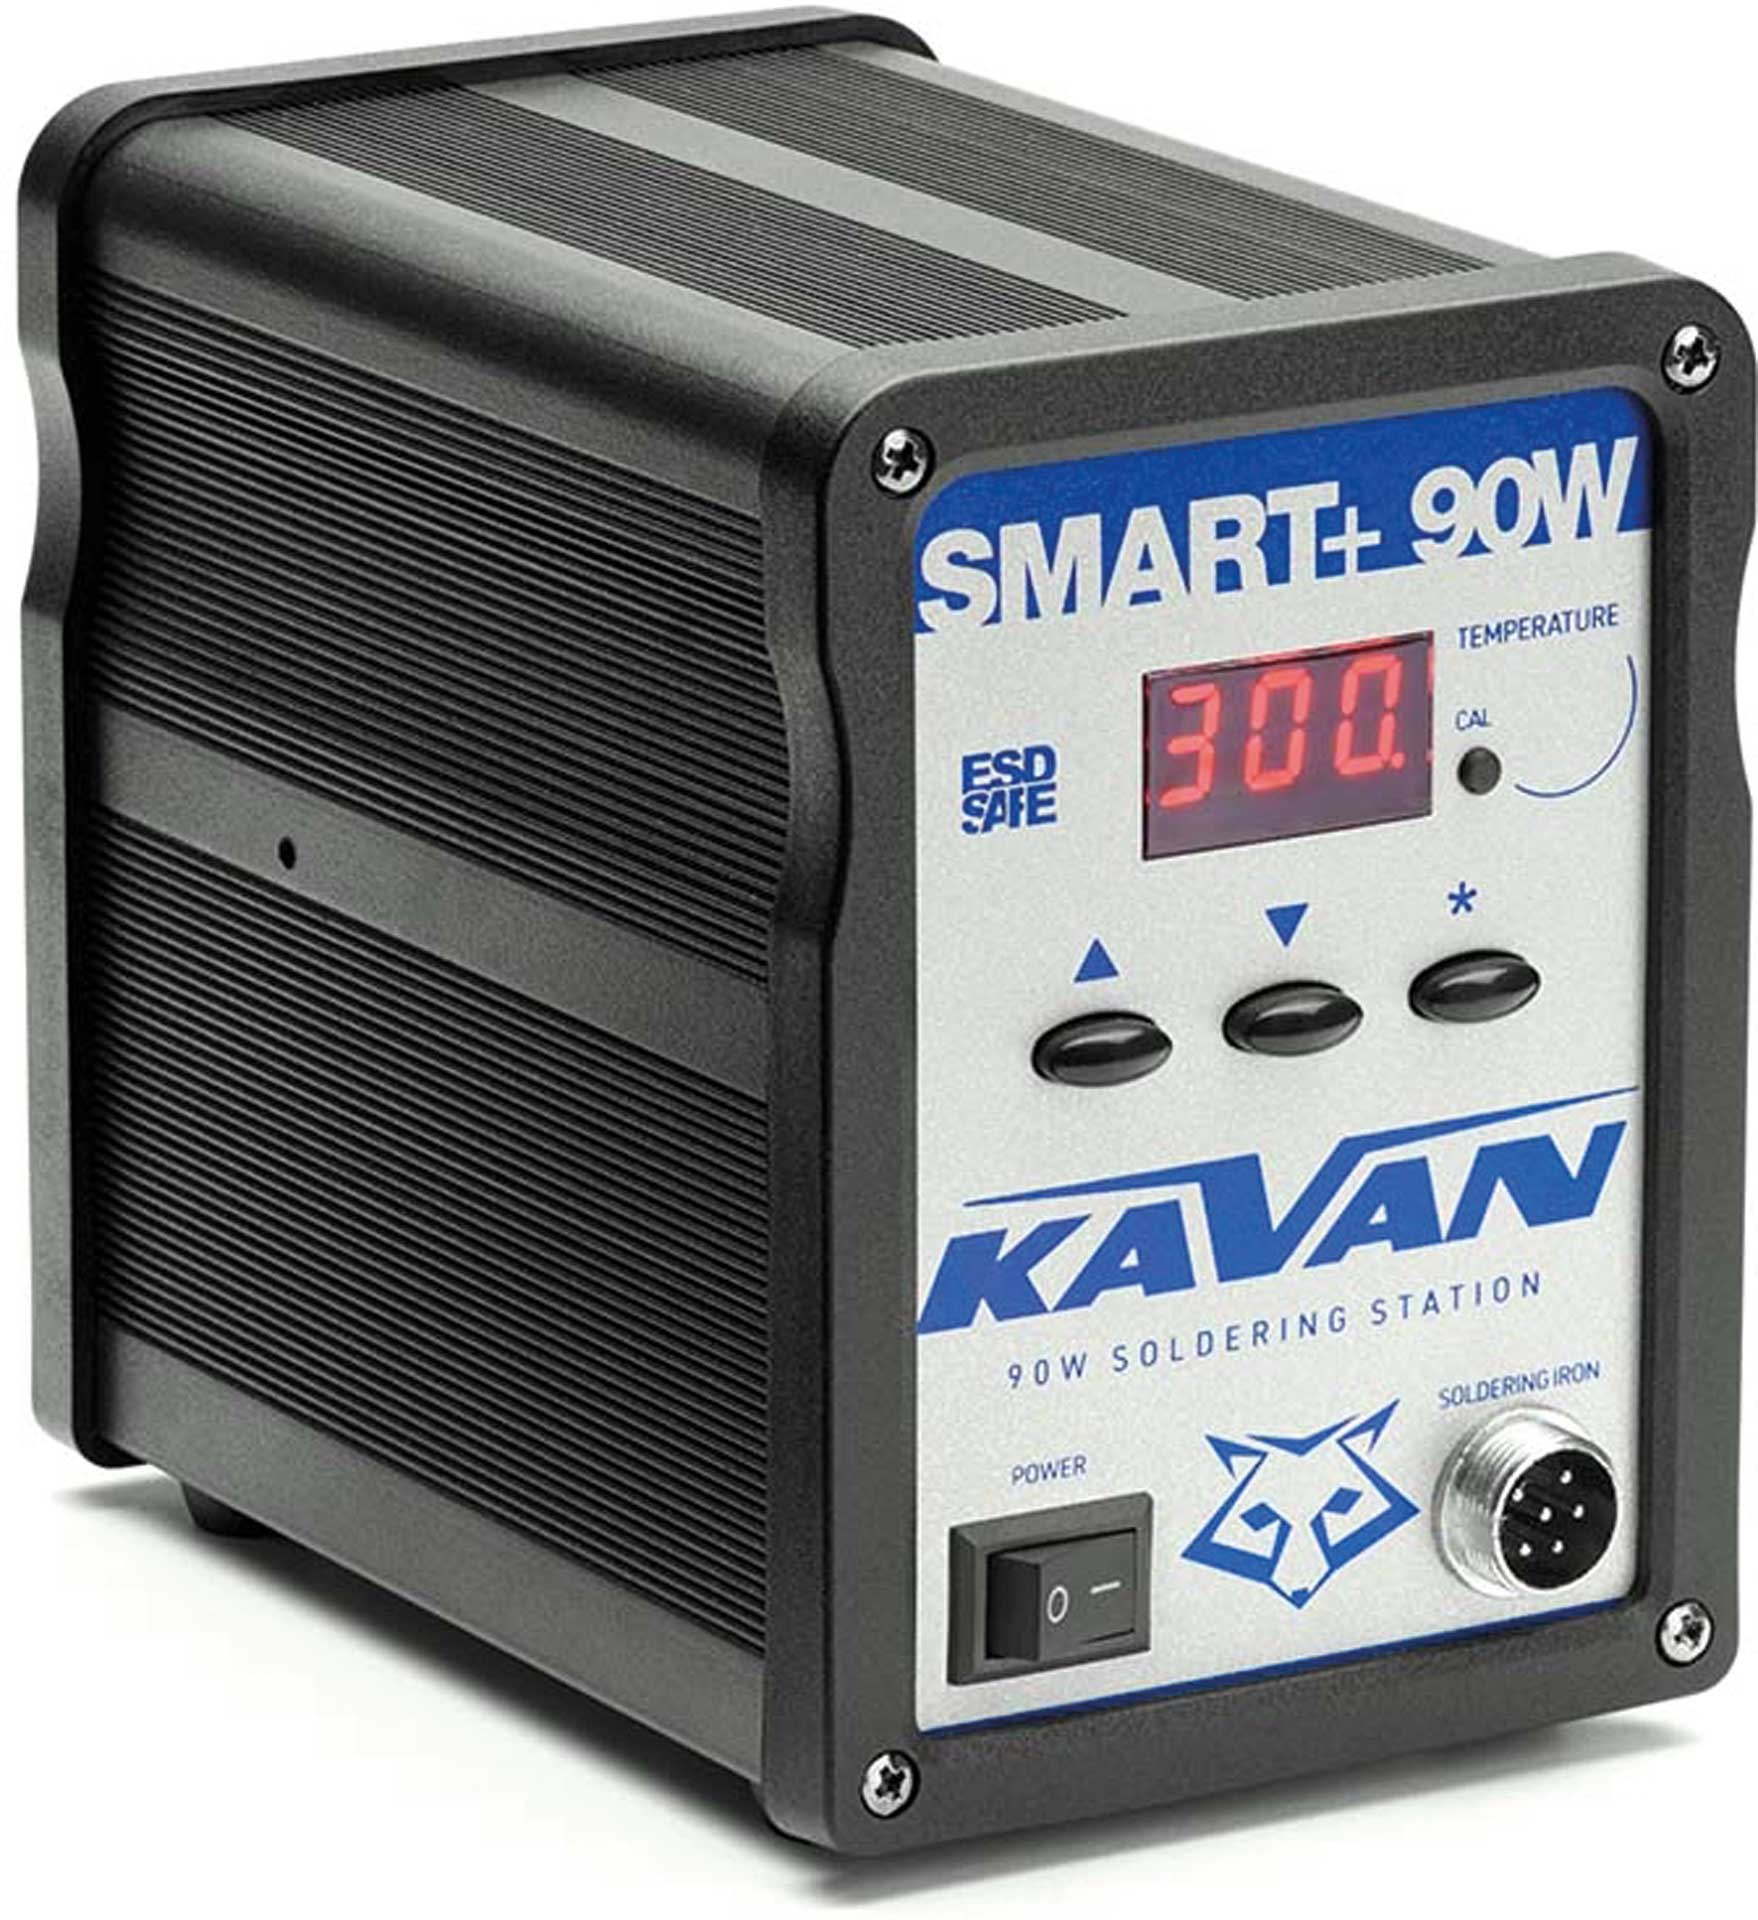 KAVAN Digital soldering station Smart+ 90W